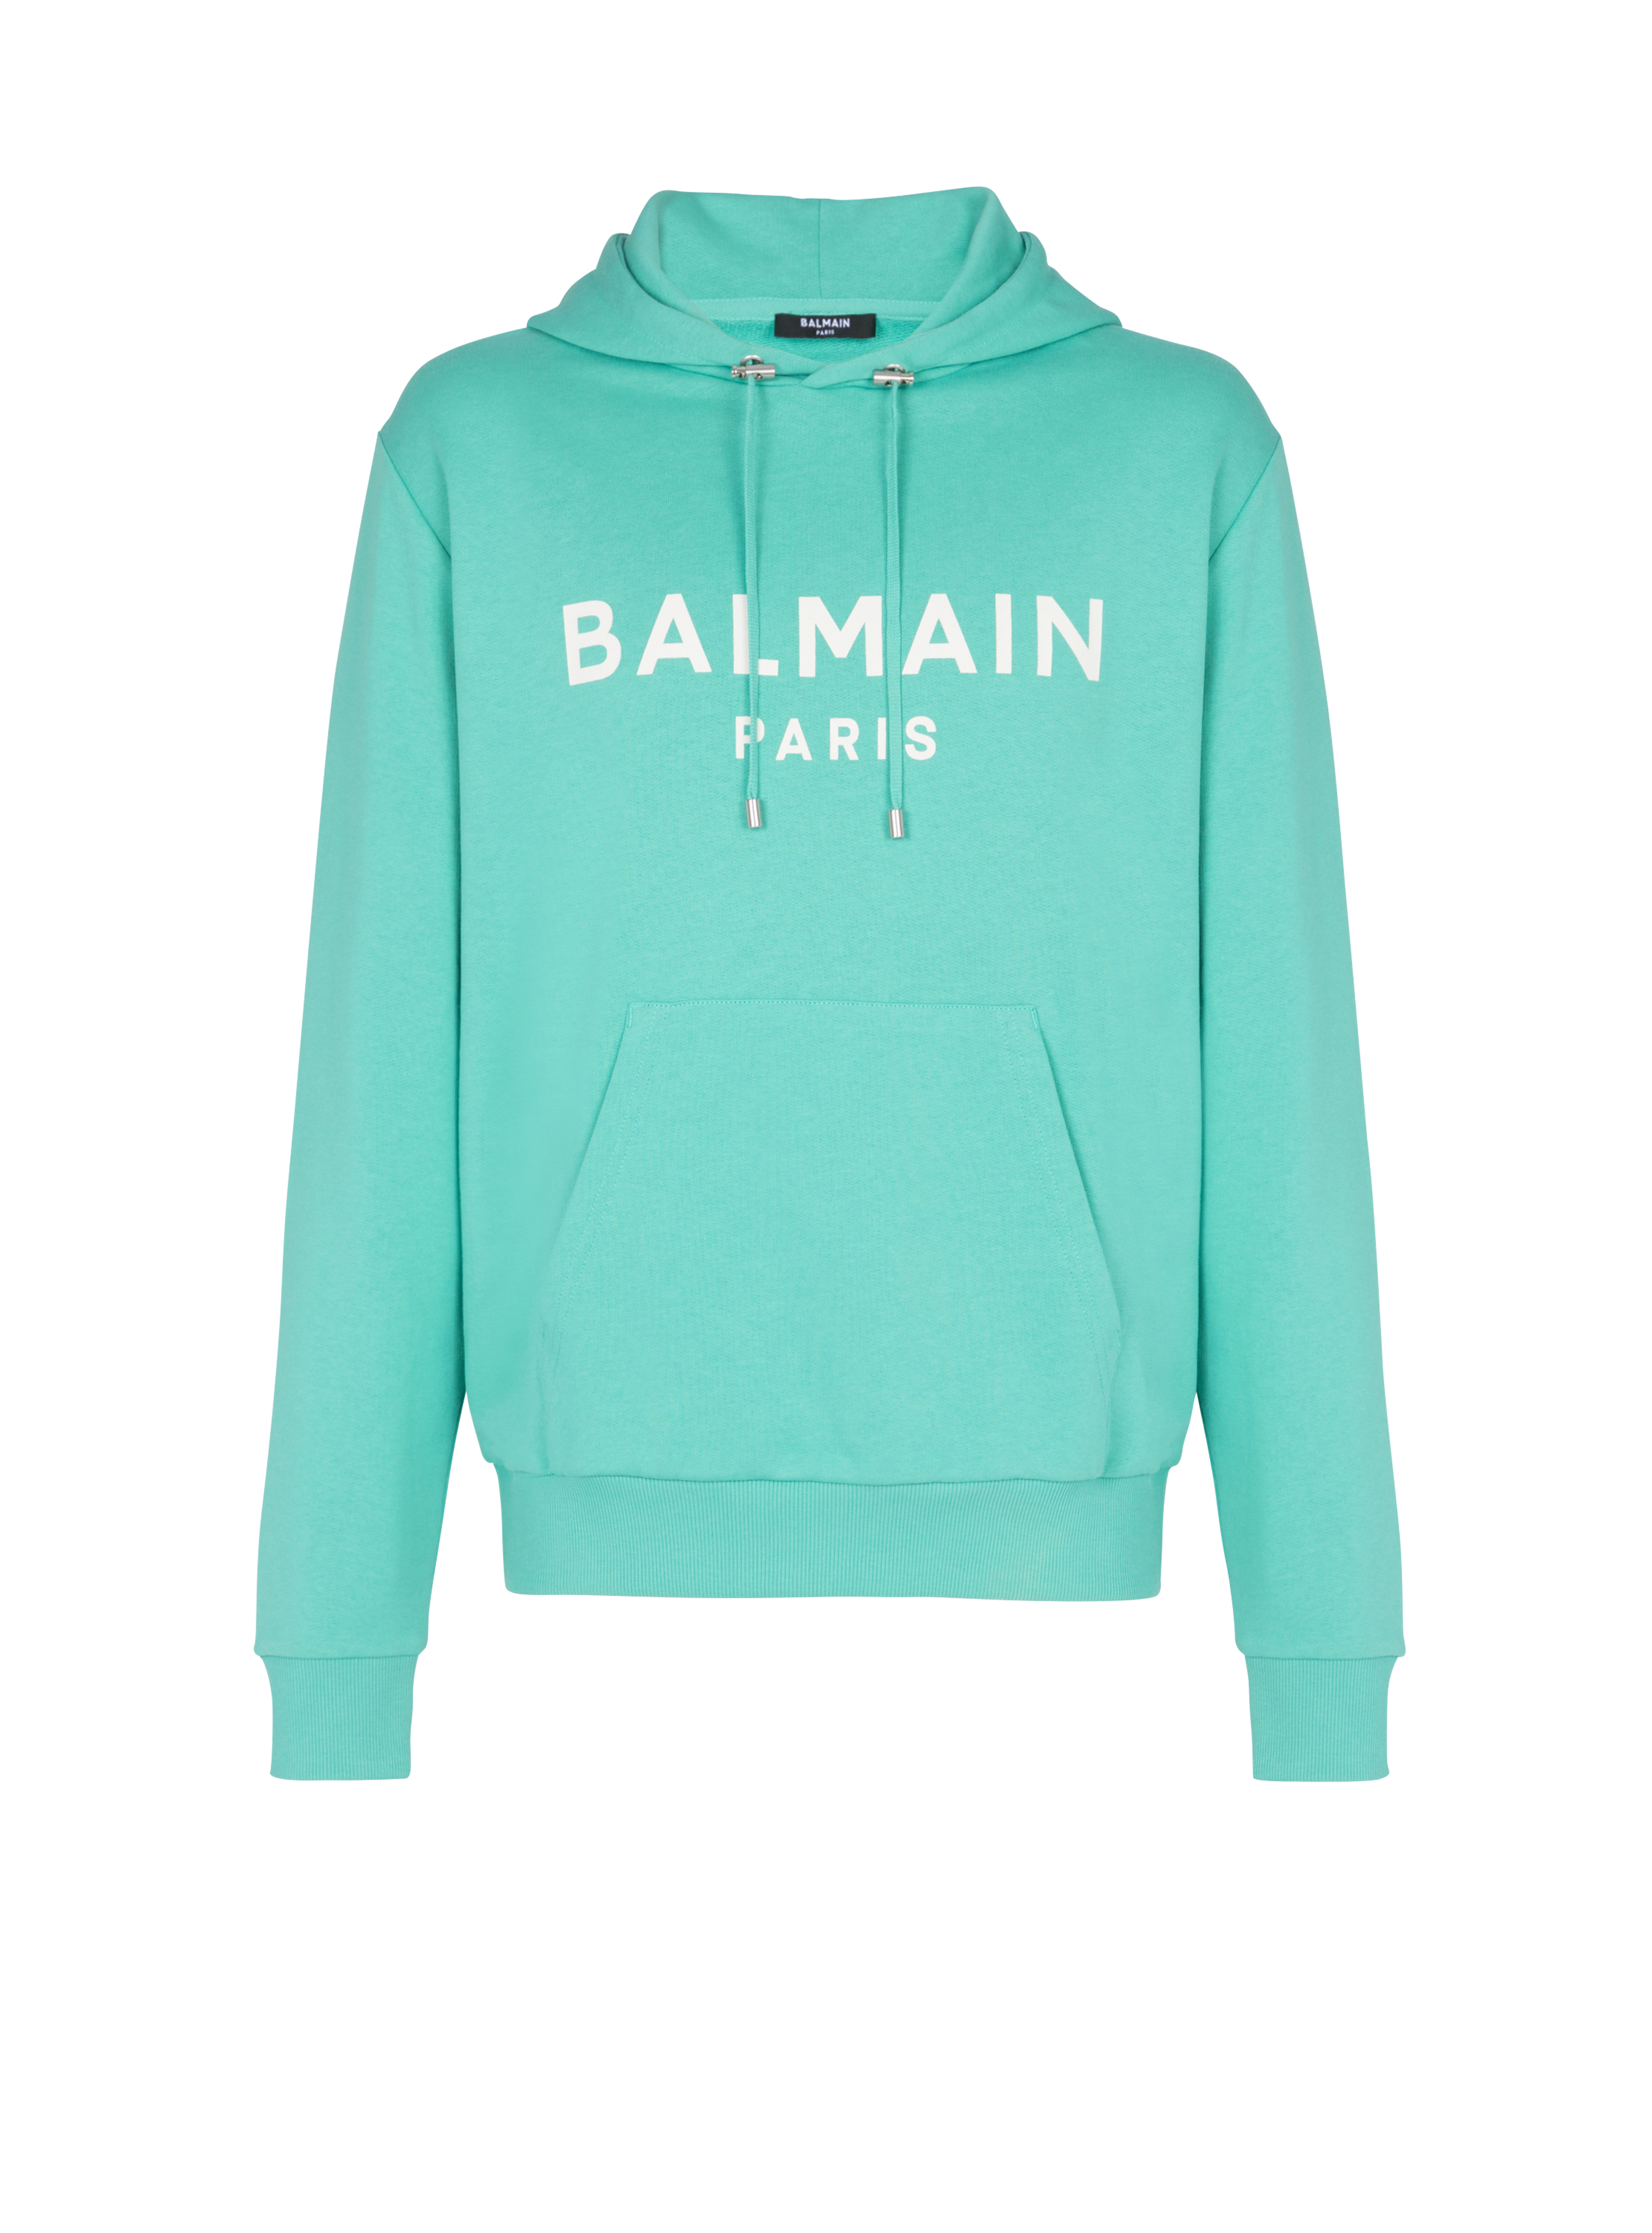 Balmain巴尔曼标志印花棉质连帽运动衫, blue